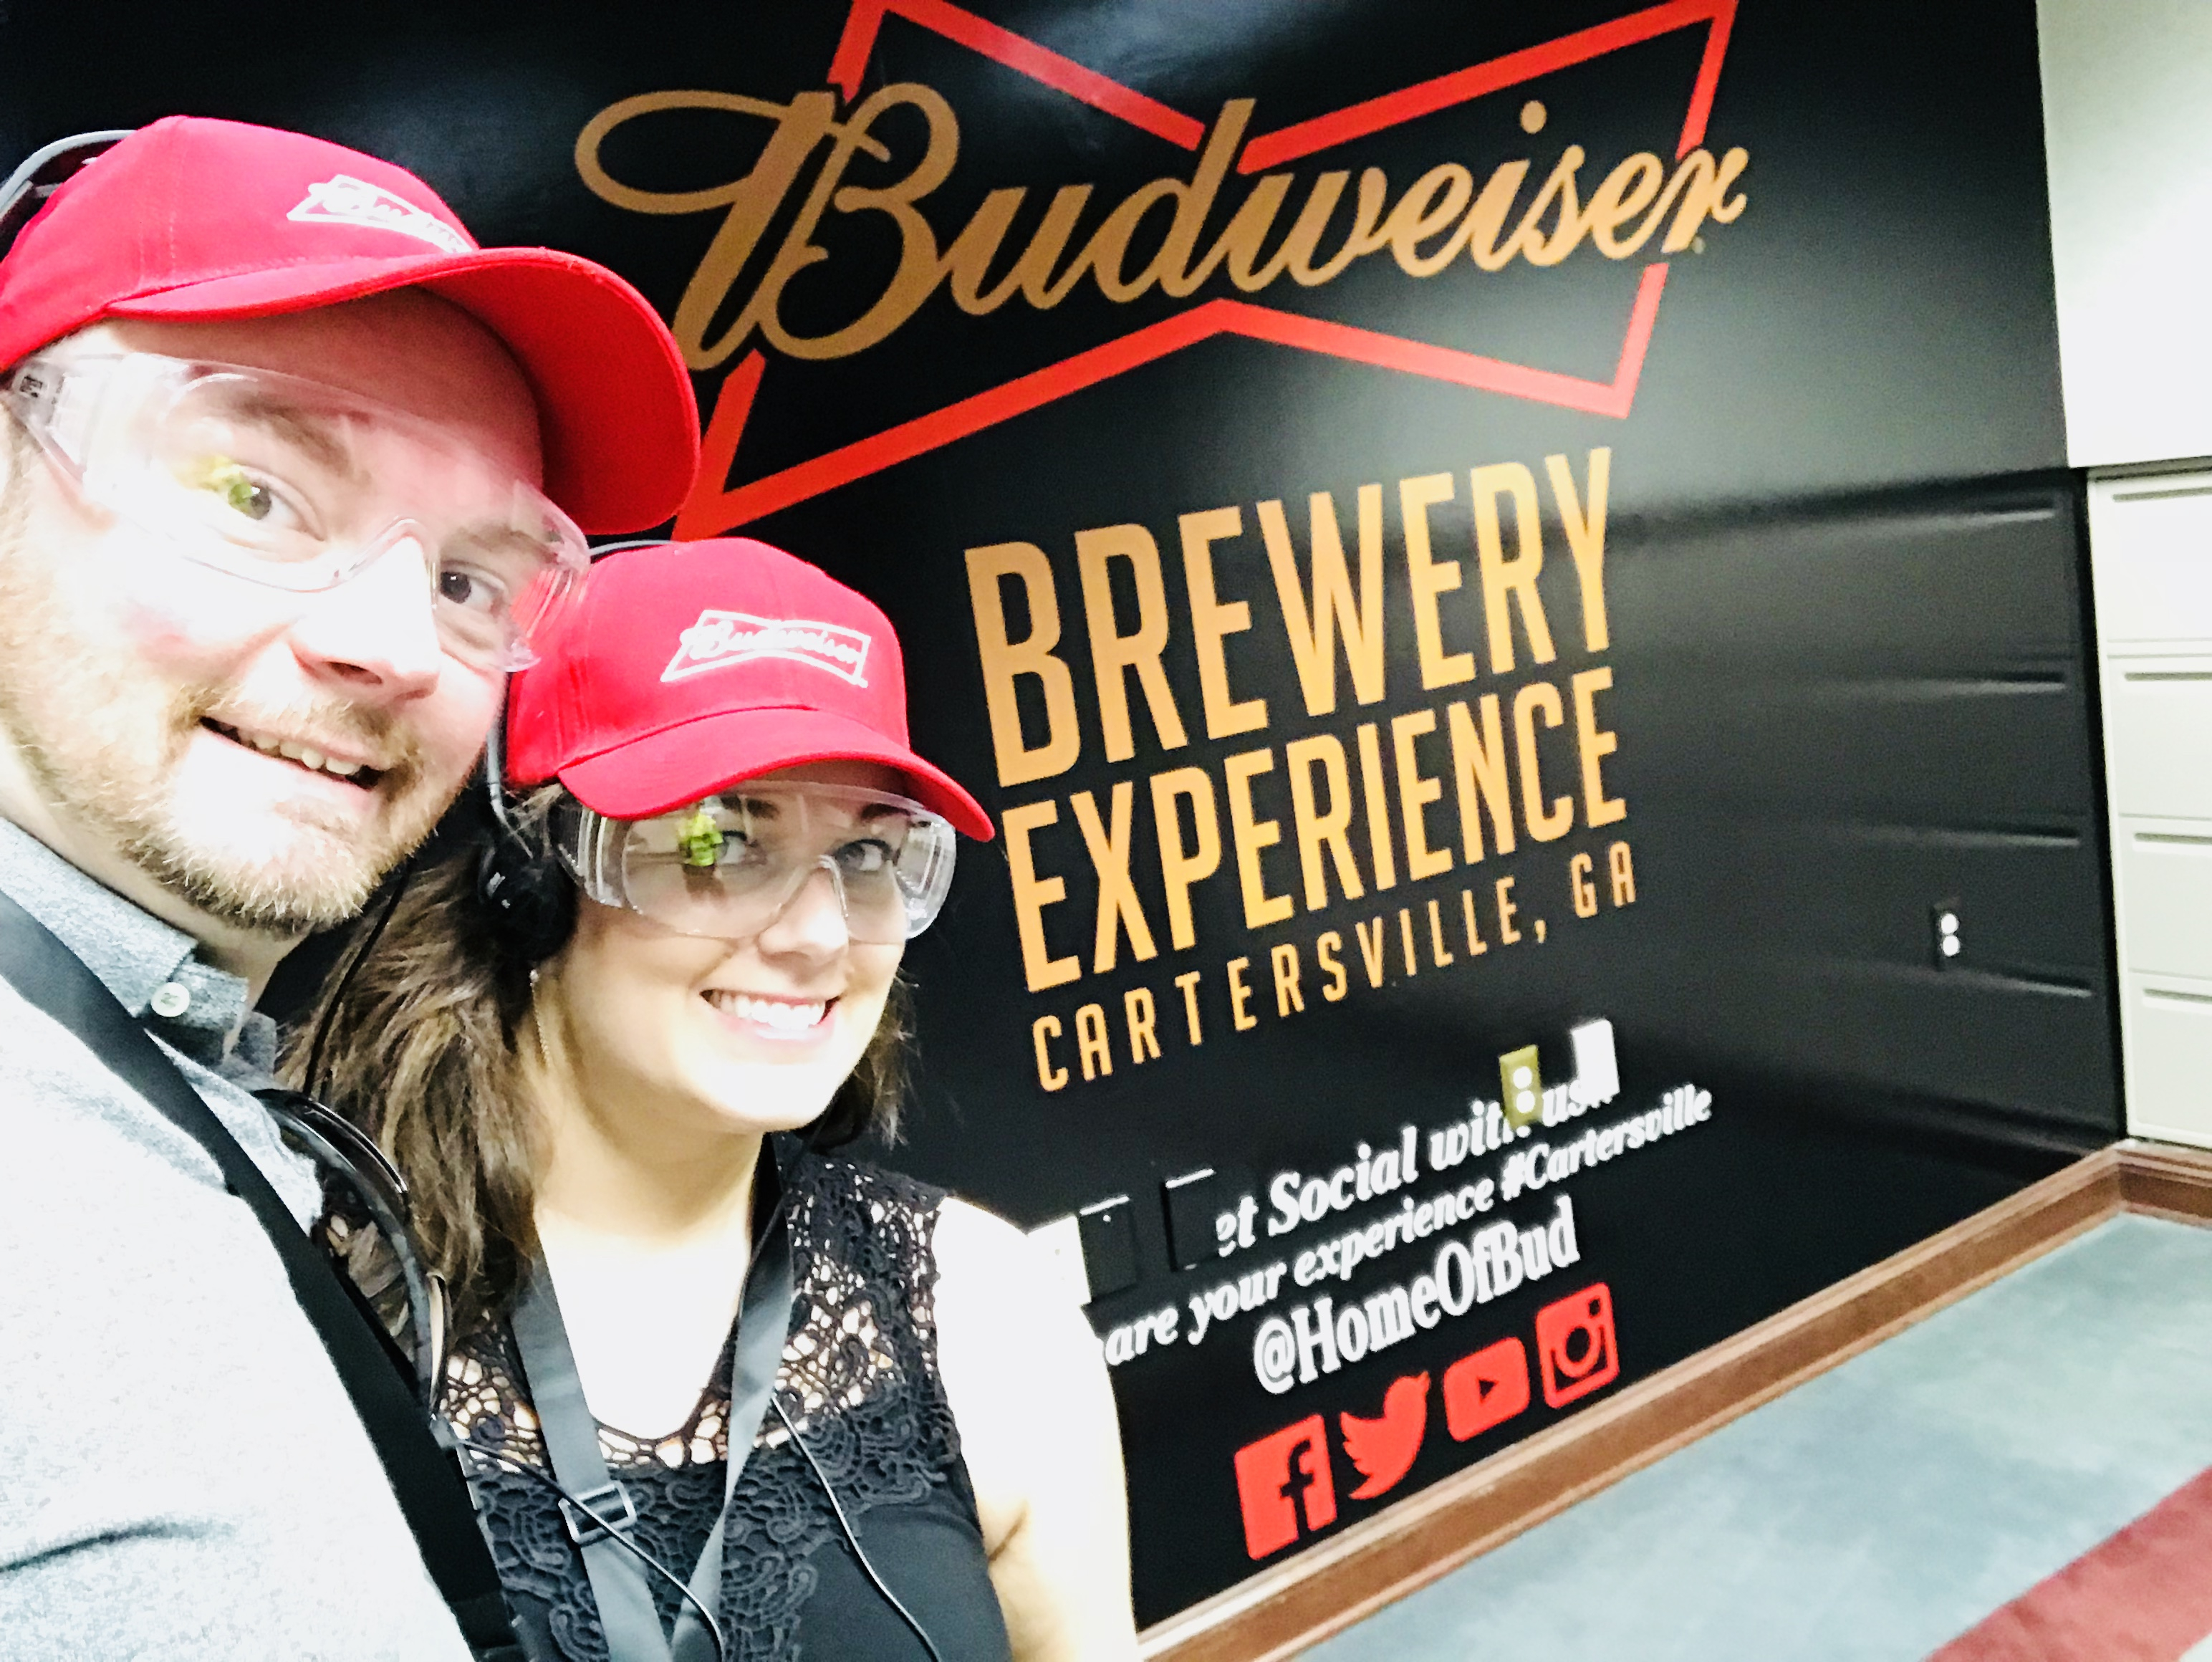 Beermaster Tour, Budweiser Tour, Budweiser Beer Tour, Cartserville Tour